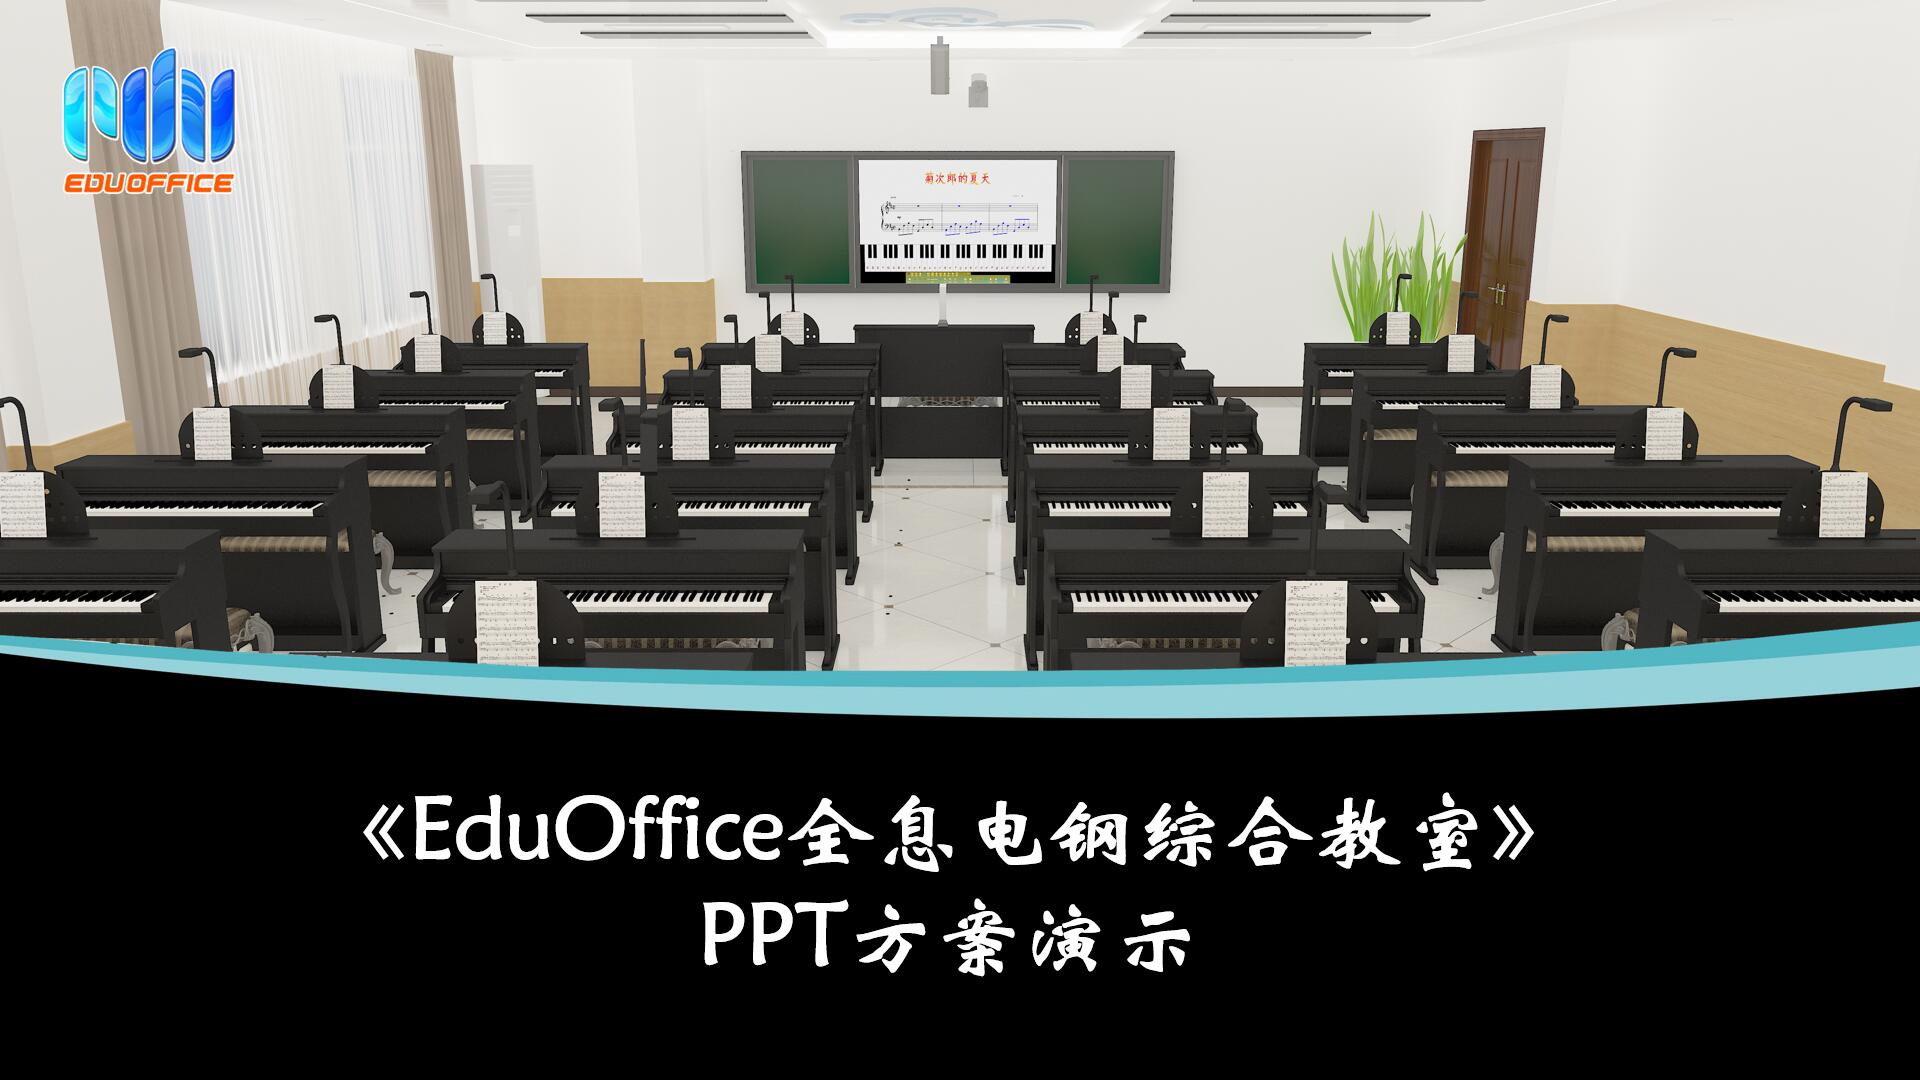 EduOffice全息电钢综合-方案介绍